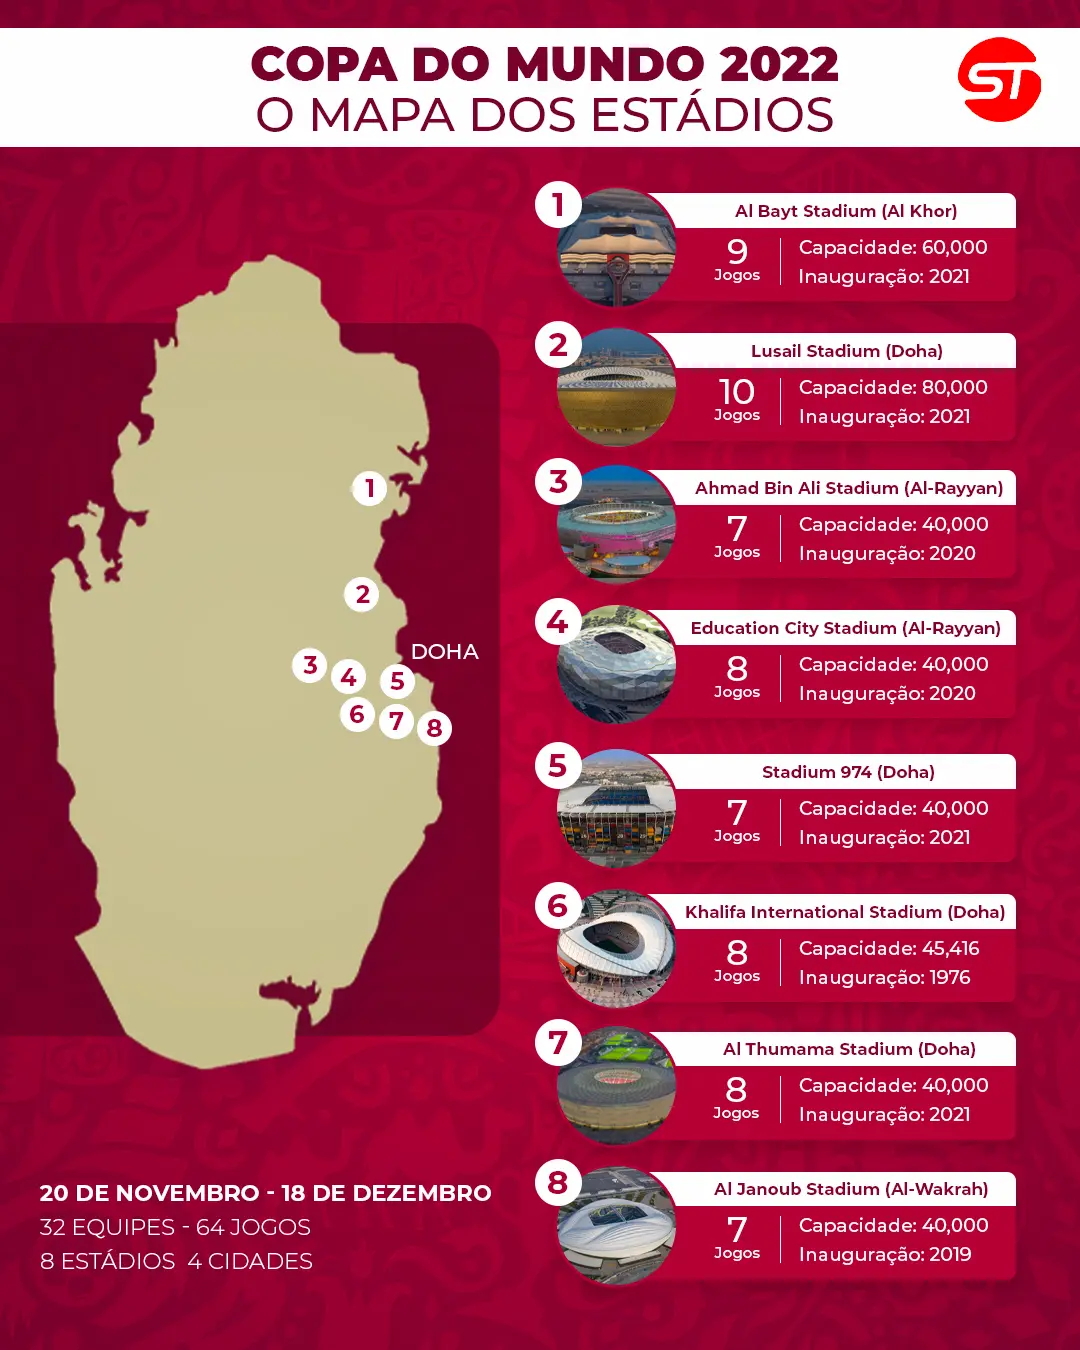 Qatar 2022 : O Mapa dos Estádios